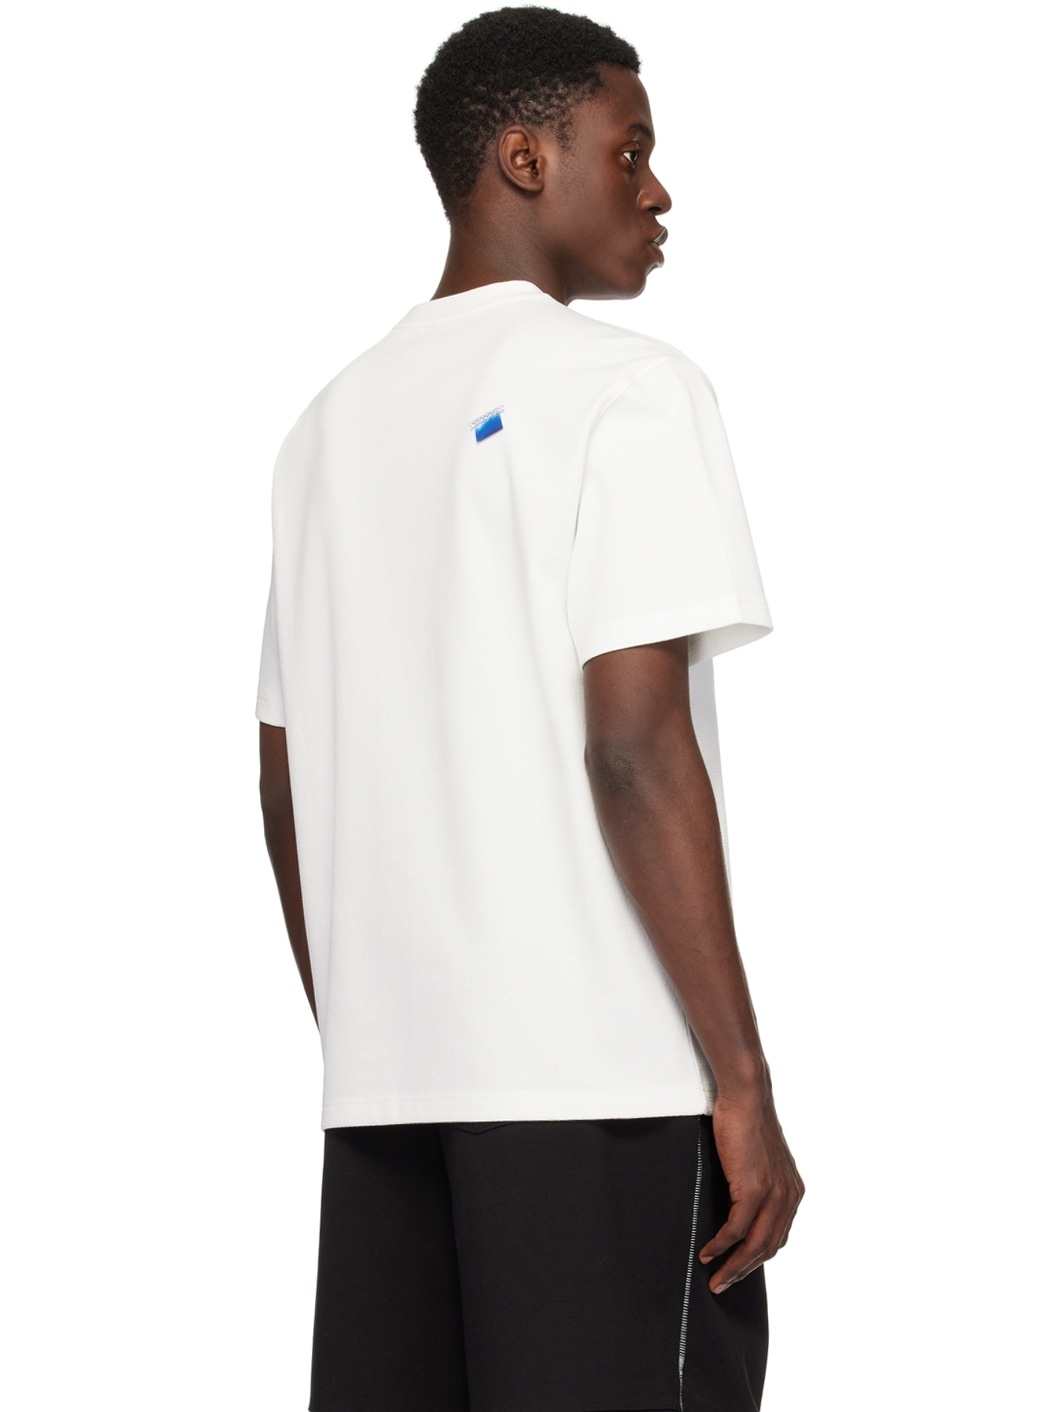 White Nolc T-Shirt - 3